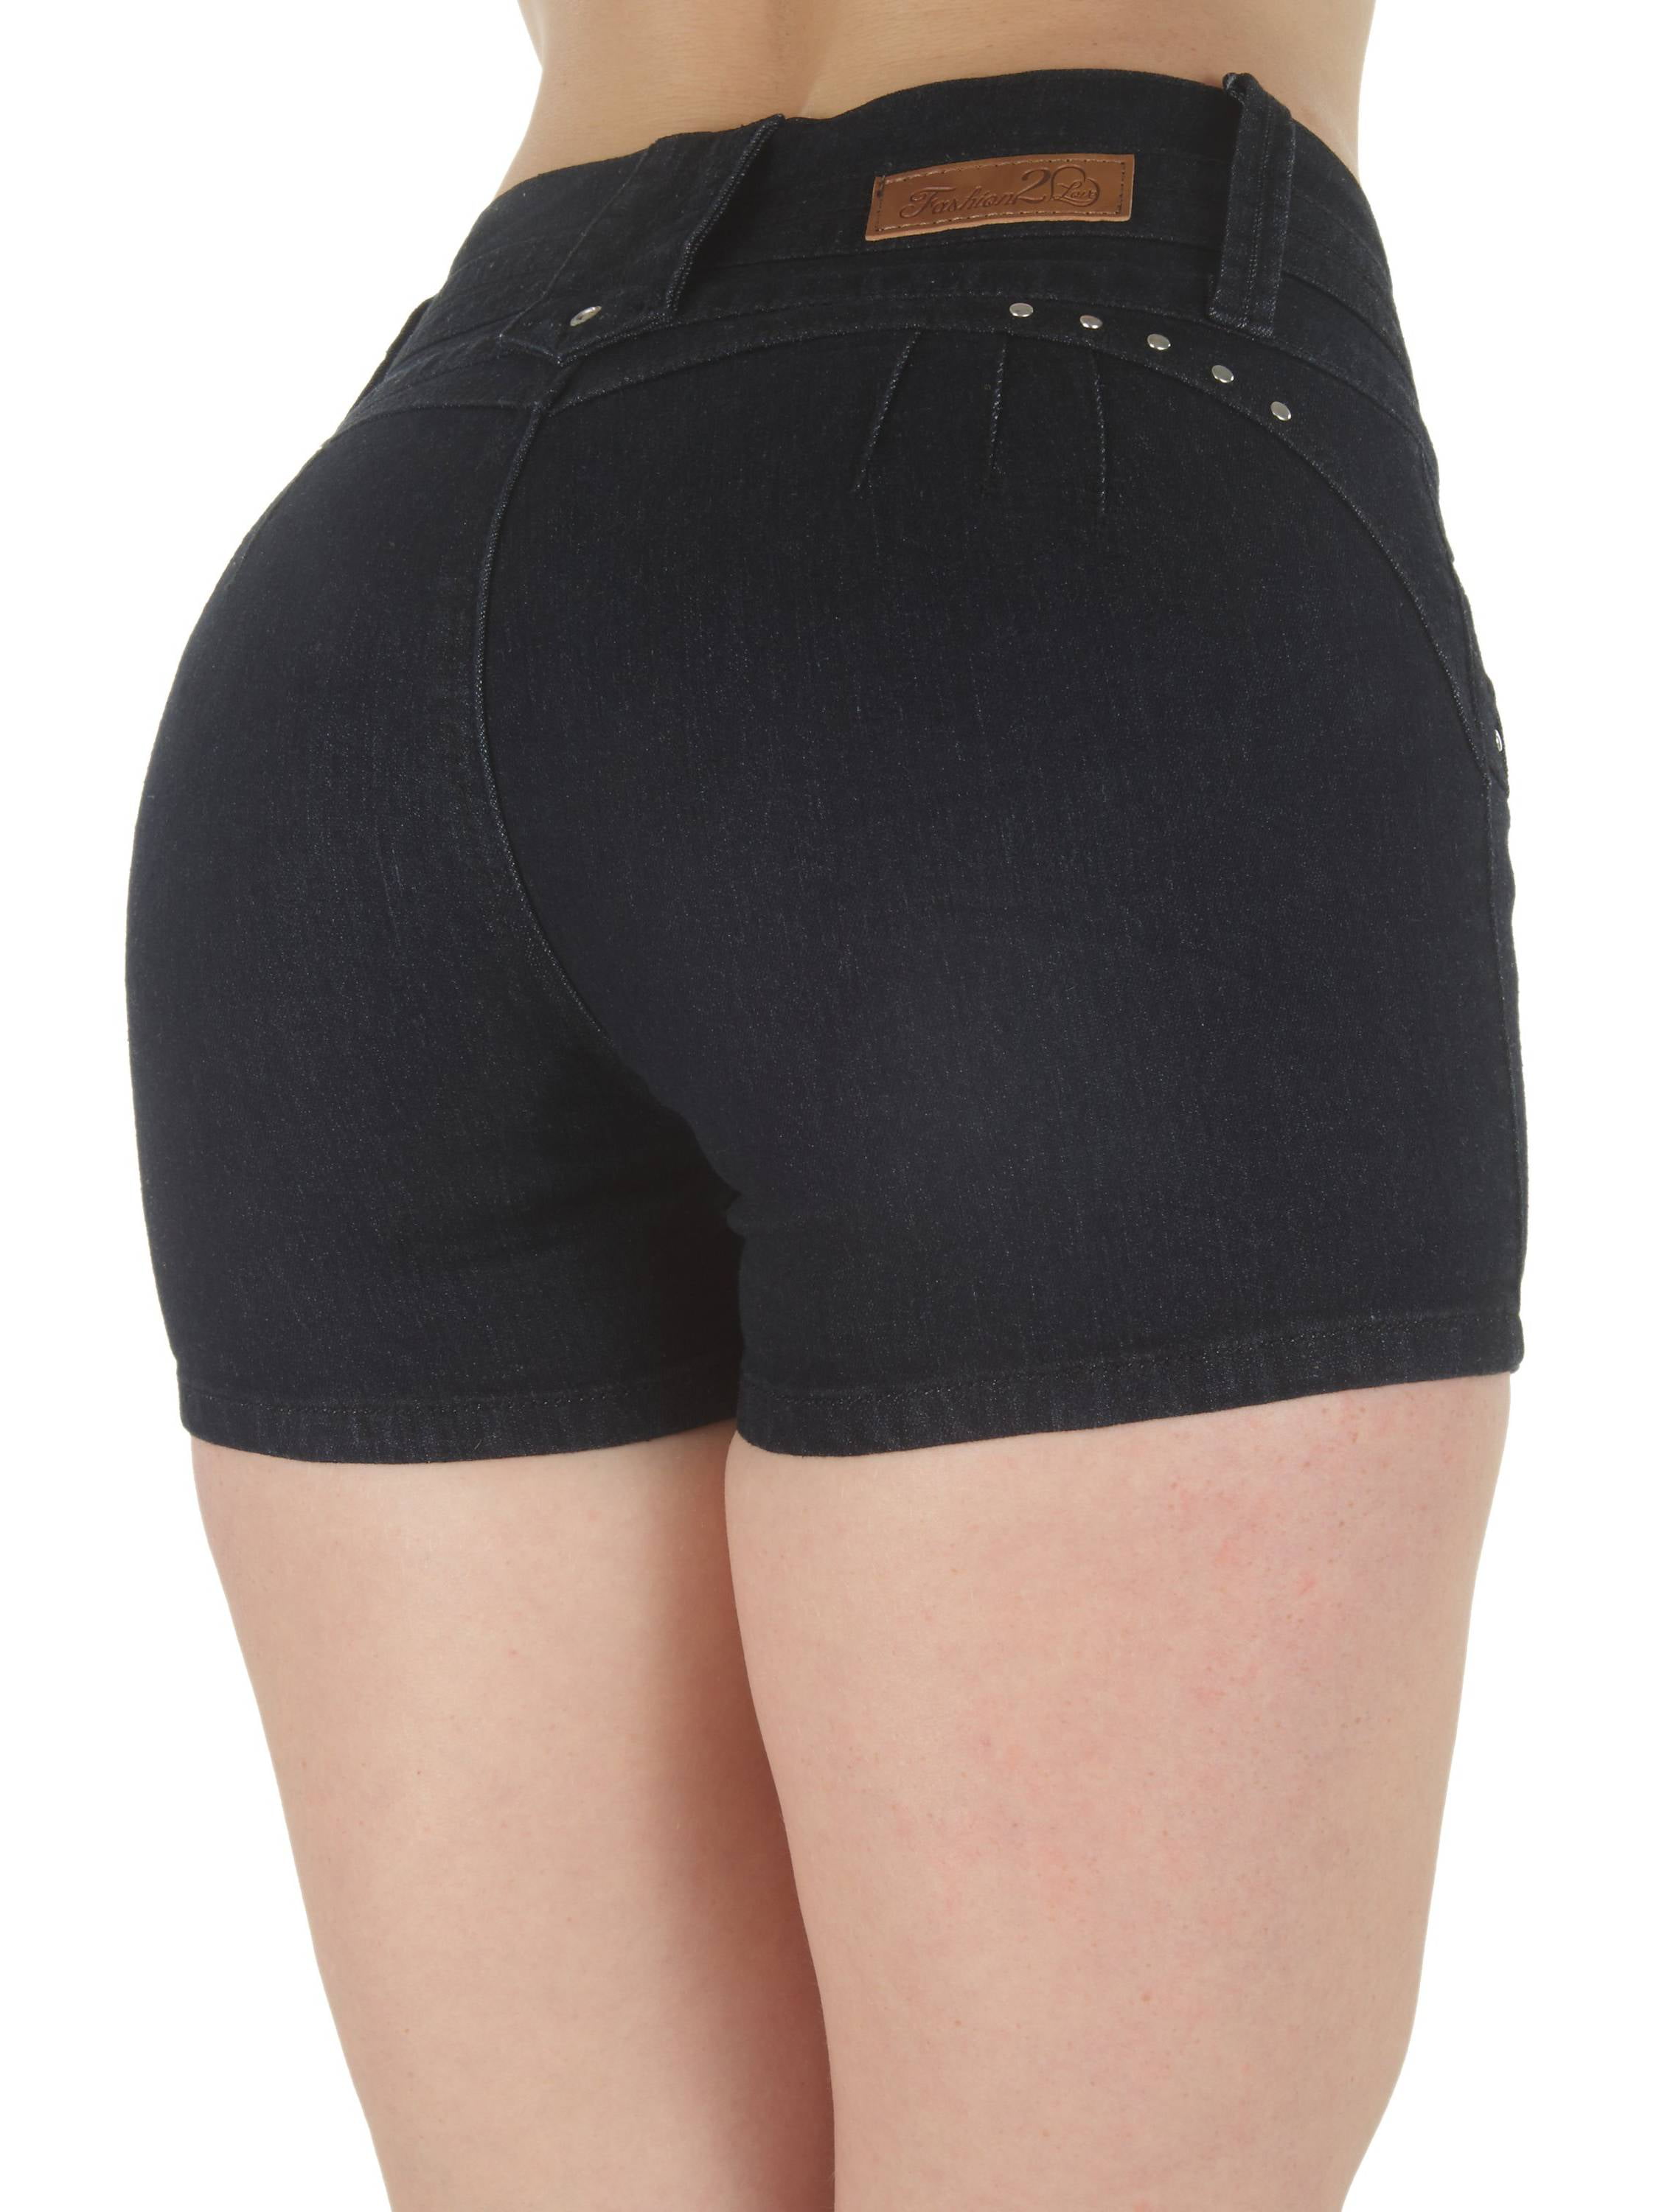 high waisted denim shorts size 14